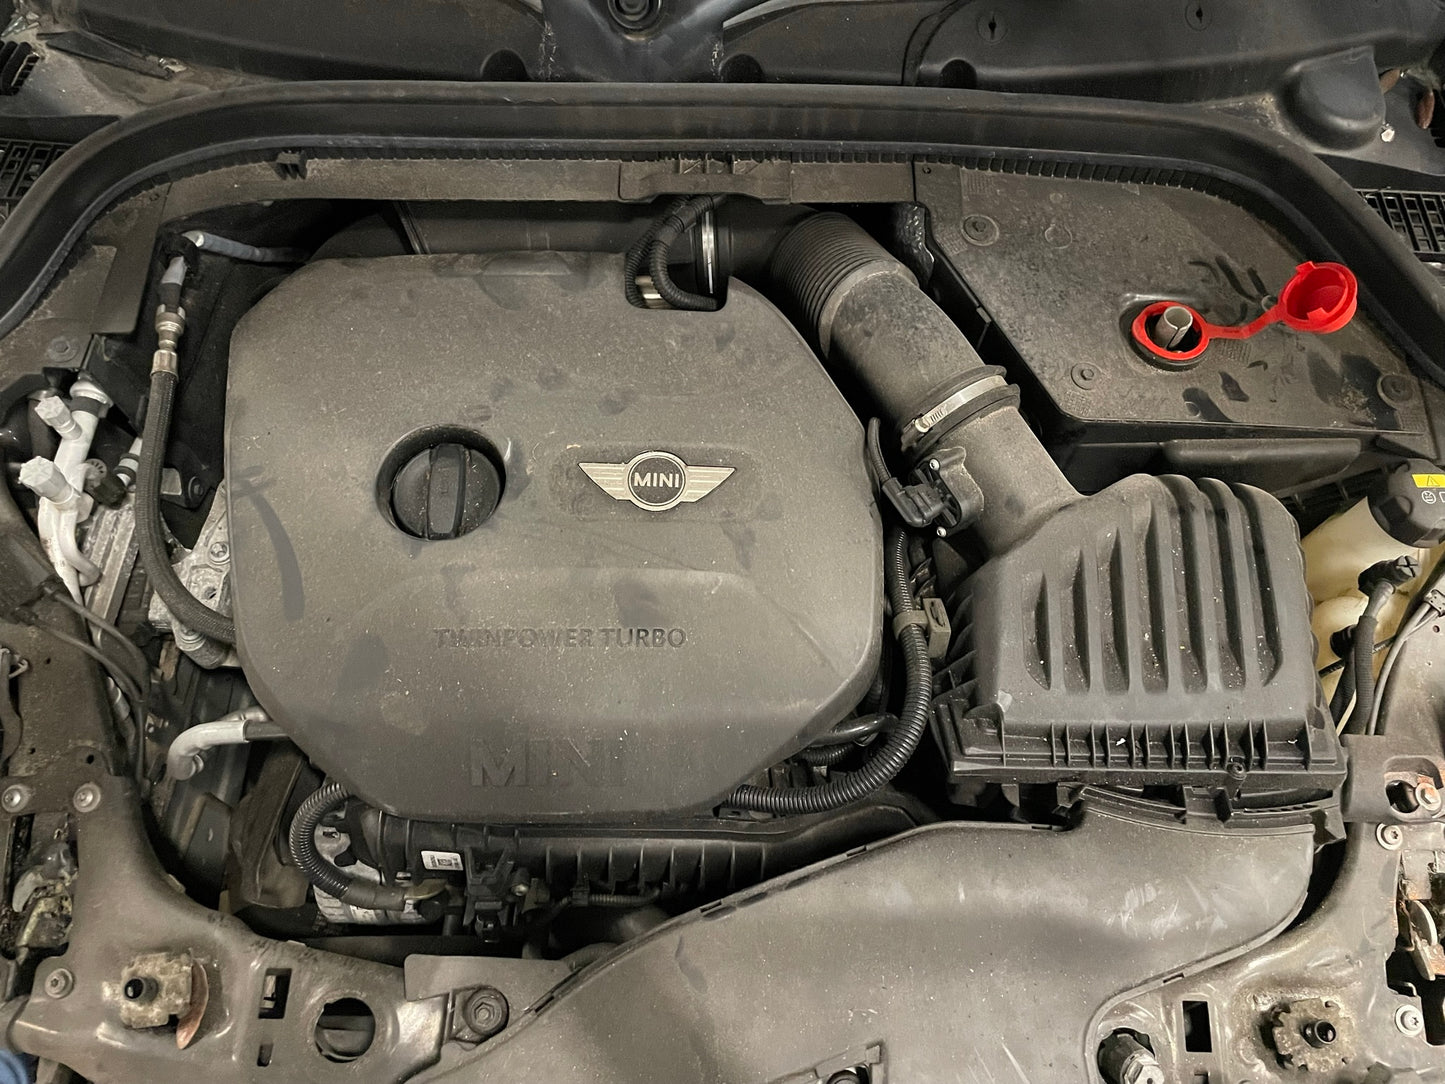 2015 MINI Cooper S, New Parts Car (February 2022) Stk #282